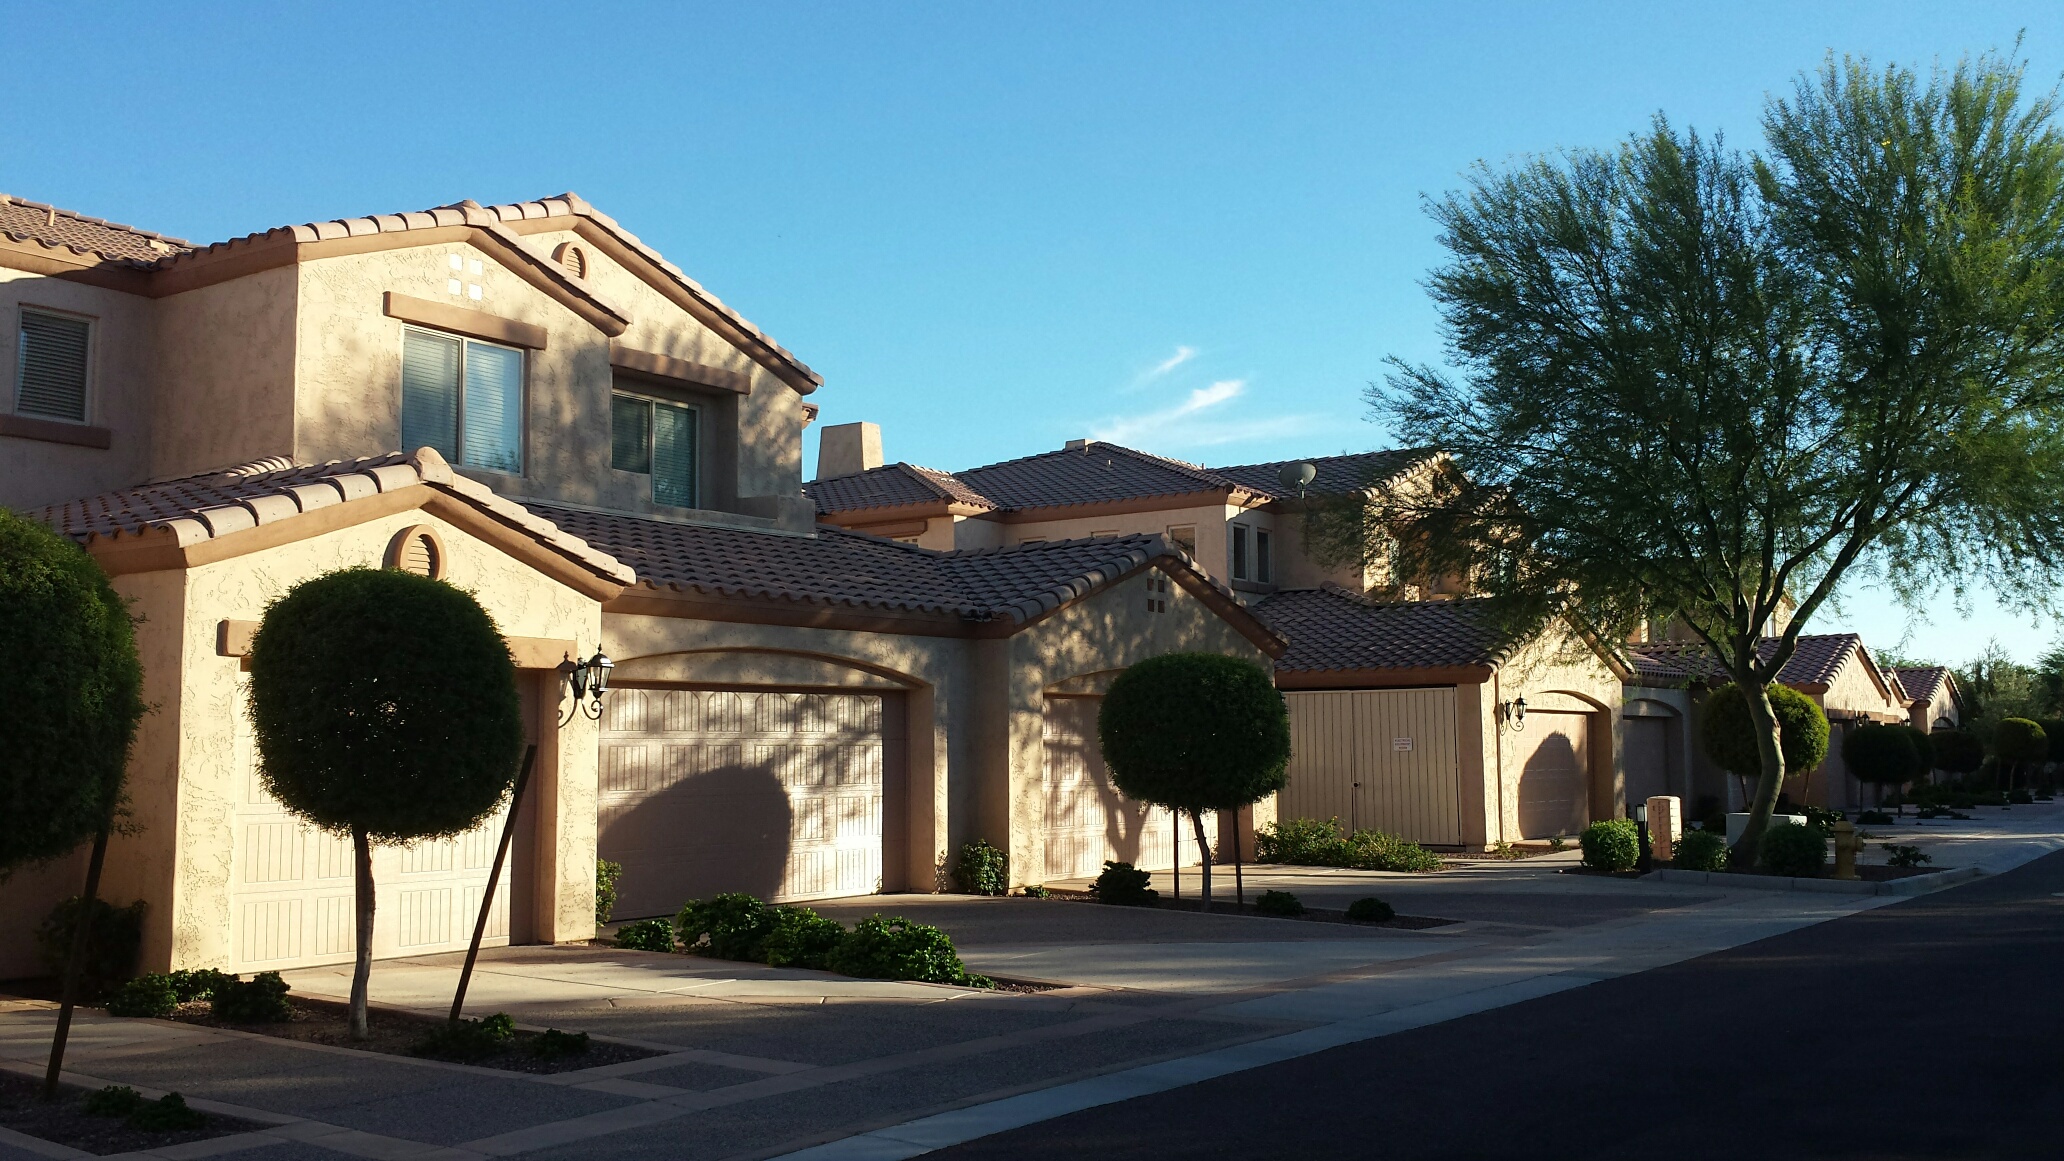 Carino Villas For Sale in Chandler, AZ | Phoenix CondoWave2064 x 1161